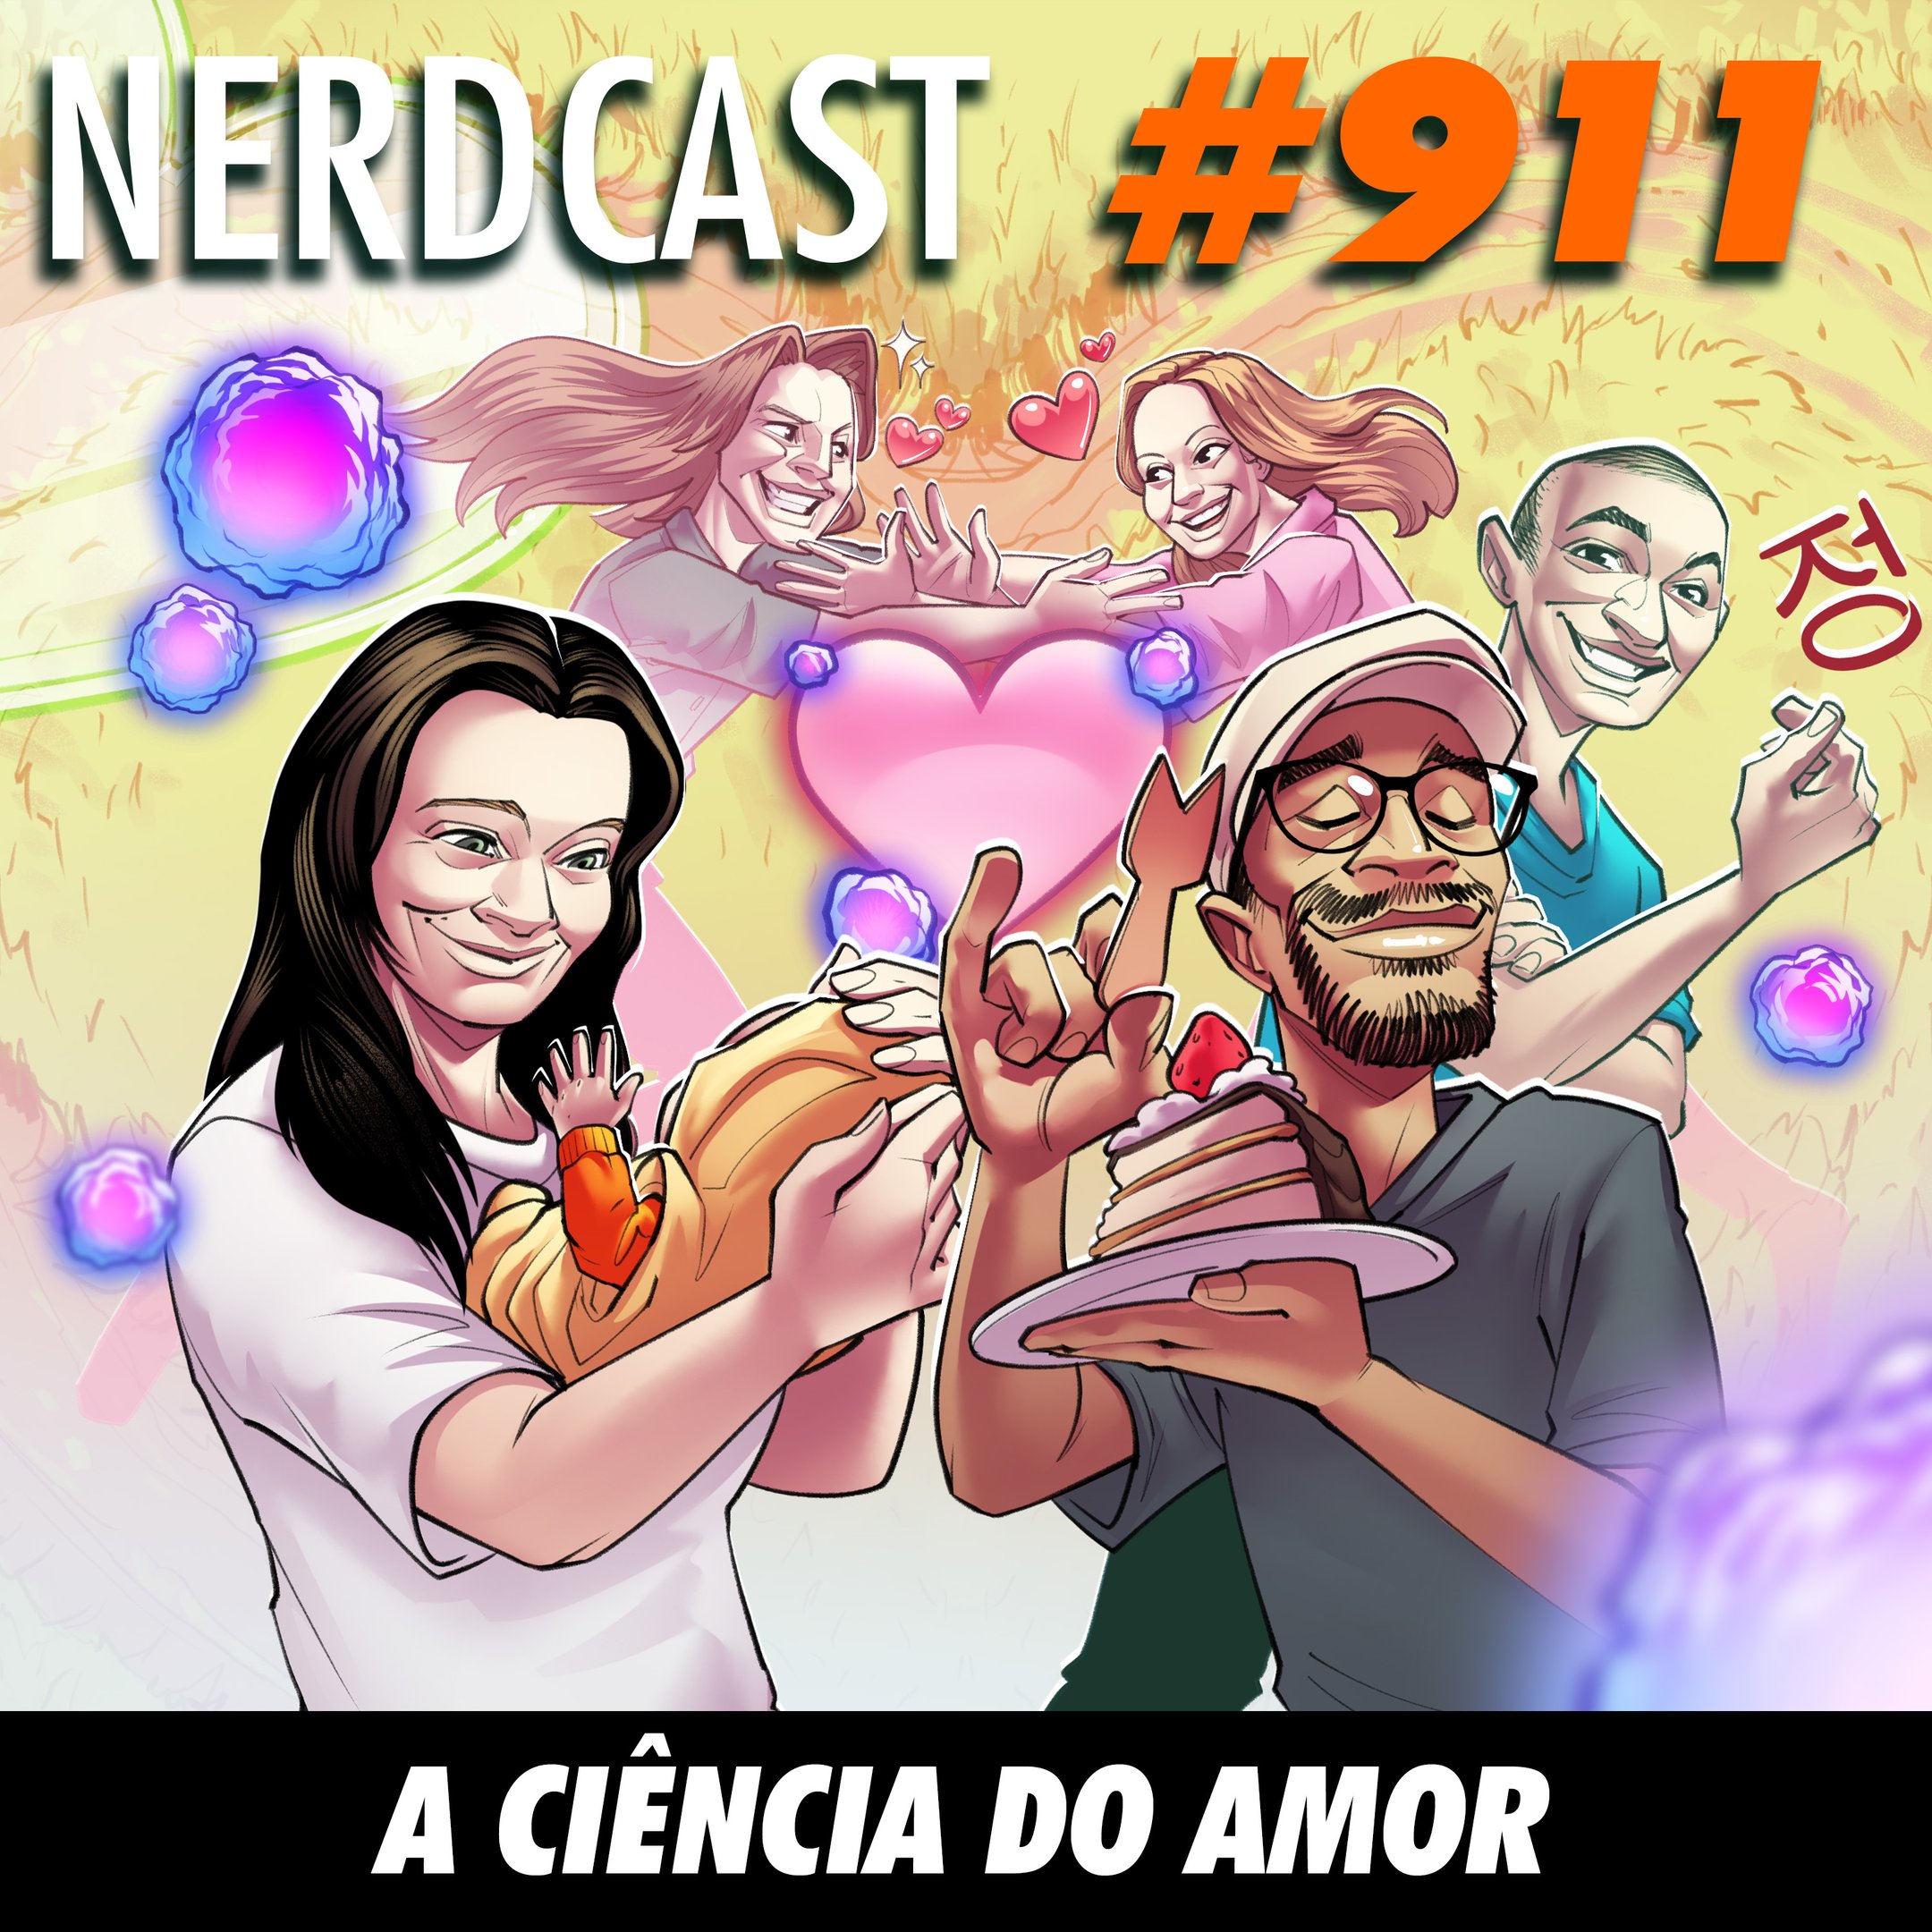 NerdCast 904 - One Piece: O rei dos live action de anime – NerdCast –  Podcast – Podtail